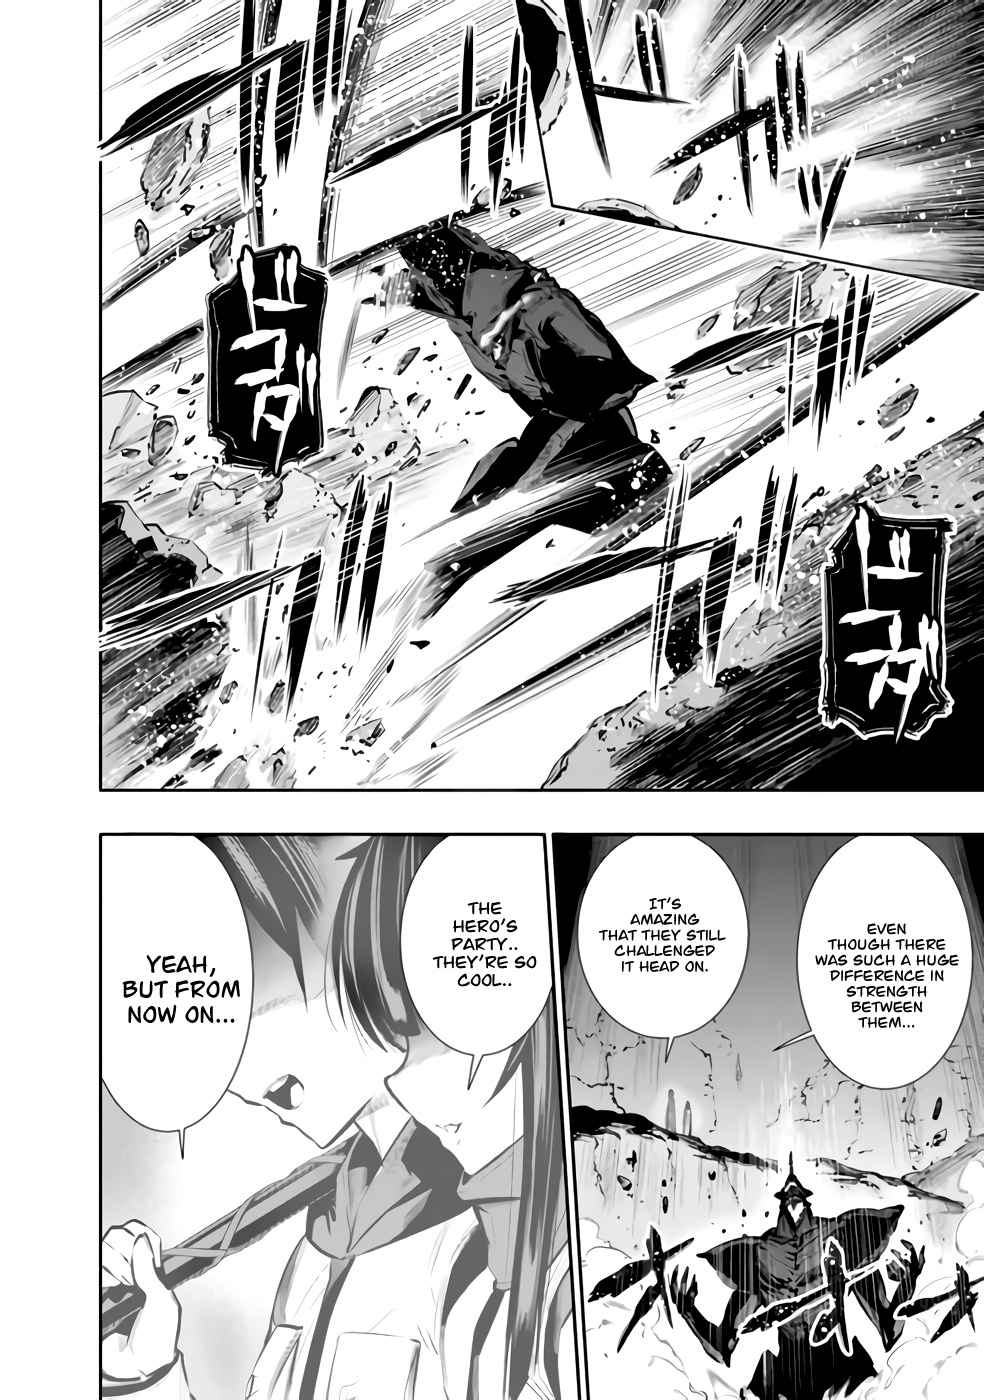 High School Of the Dead Manga Commission - Page 6 by Arashi-Matoi